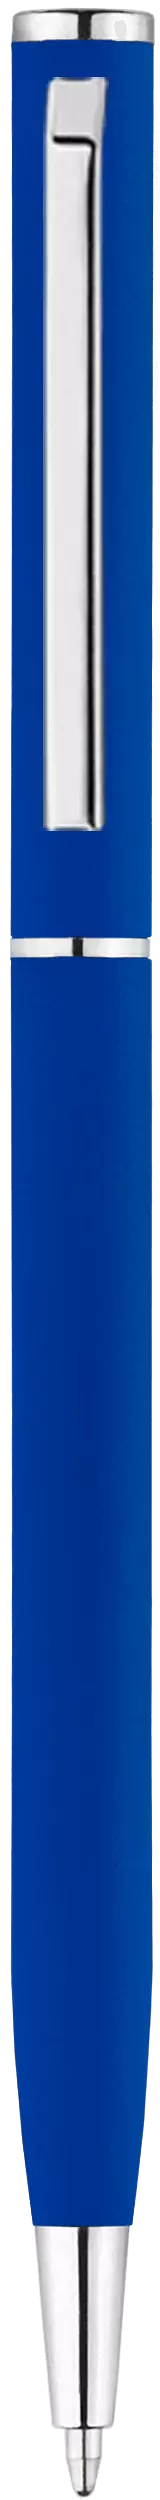 Ручка HILTON Синяя 1060-01